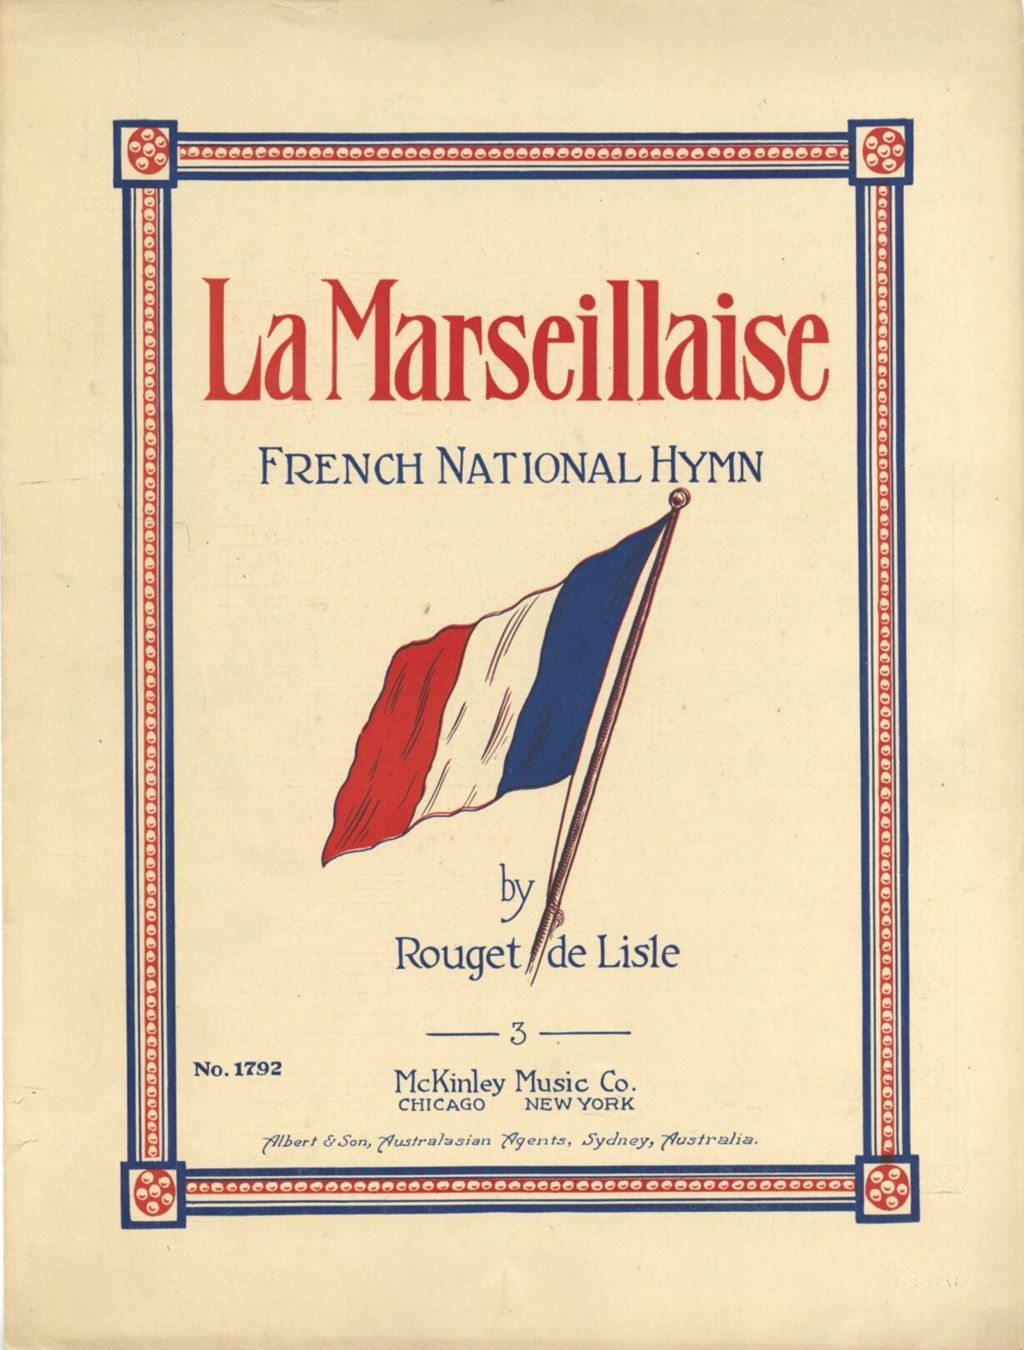 La Marseillaise (French National Hymn)